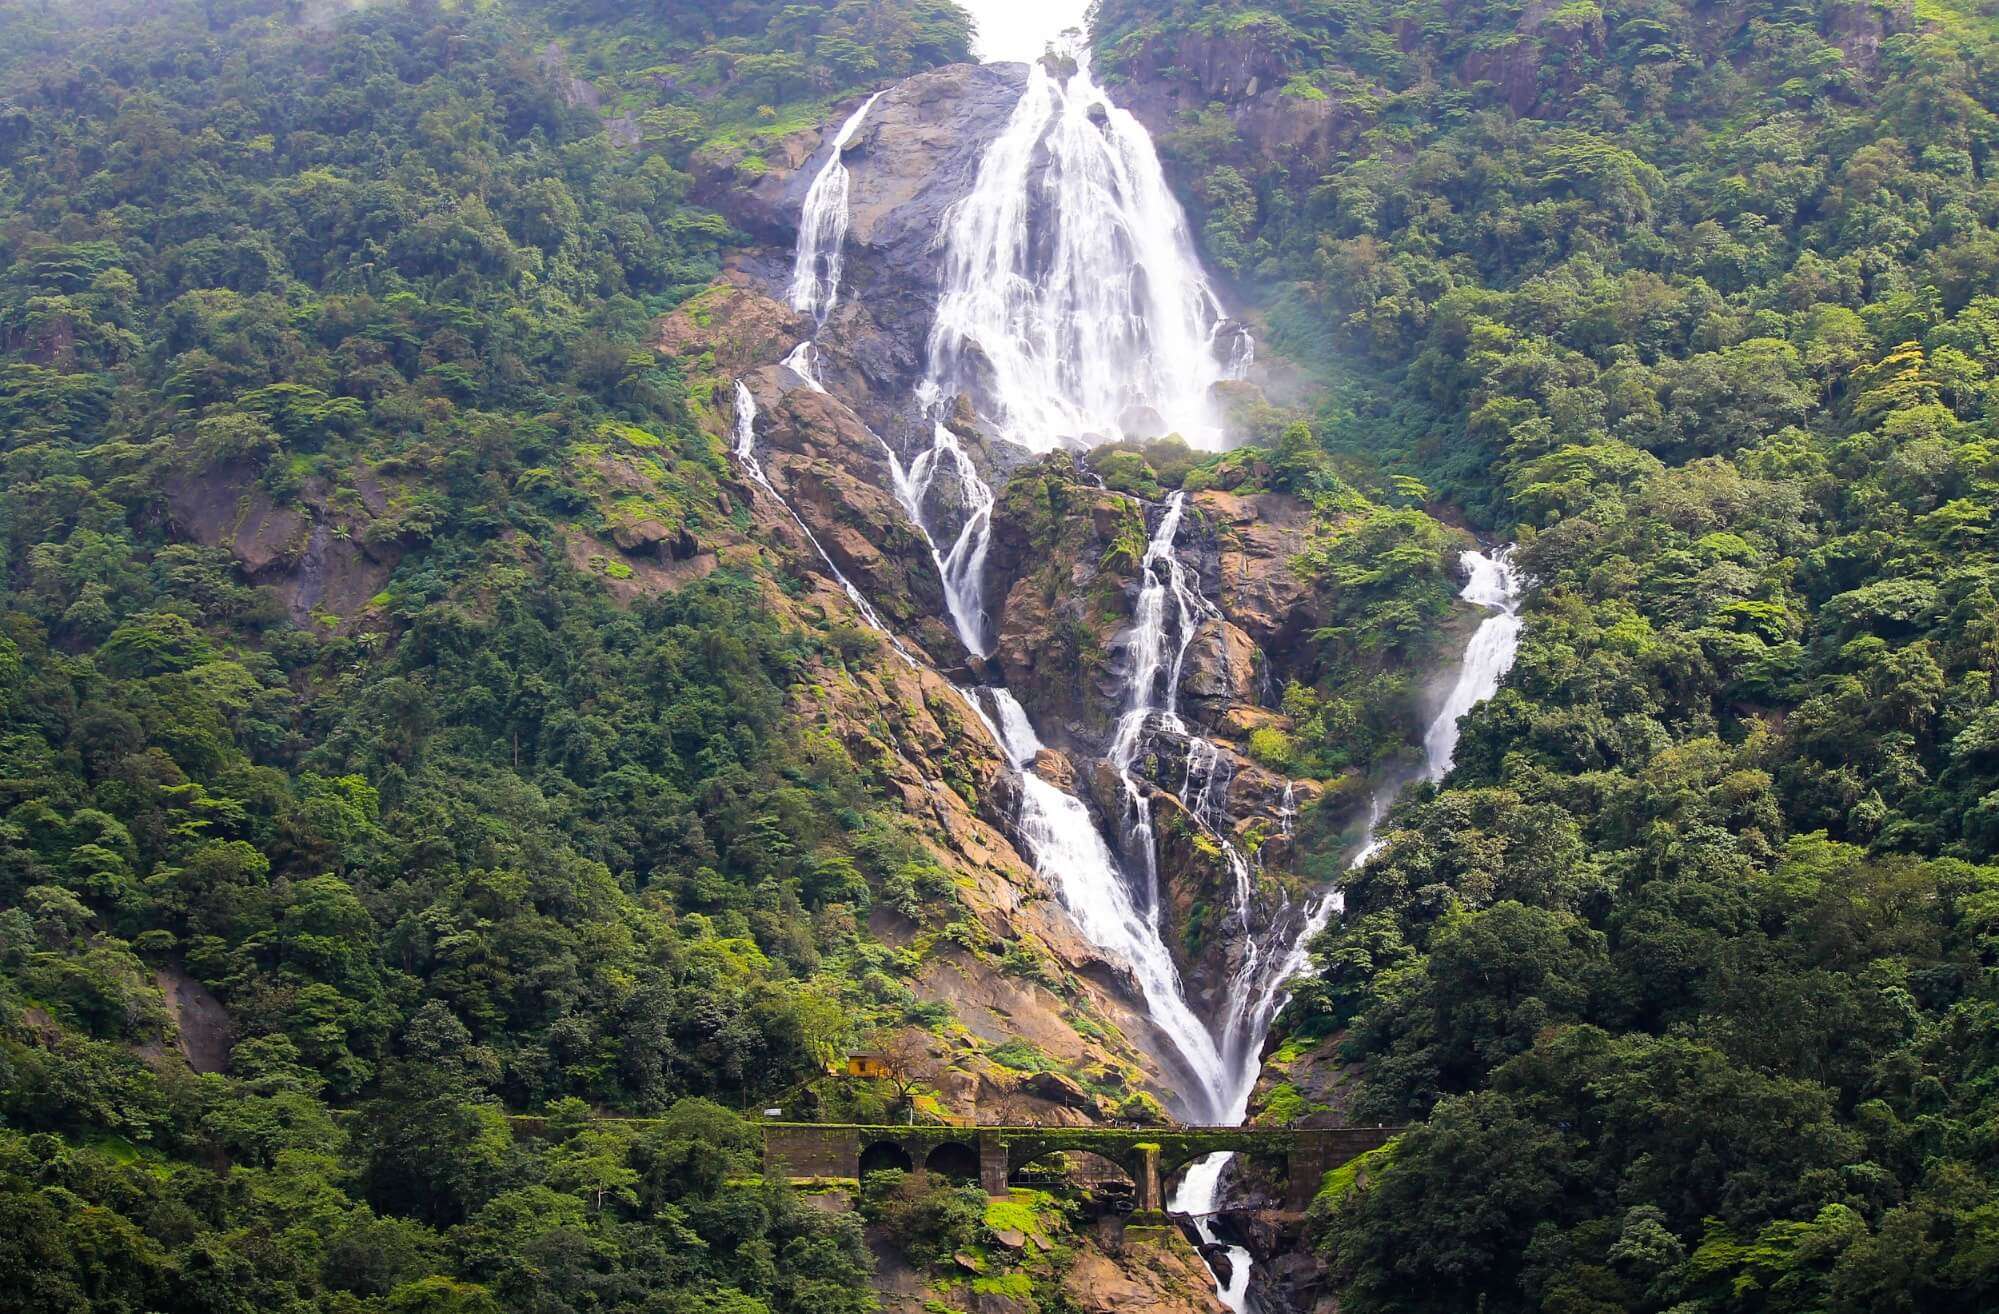 Duddhsagar waterfalls in Goa